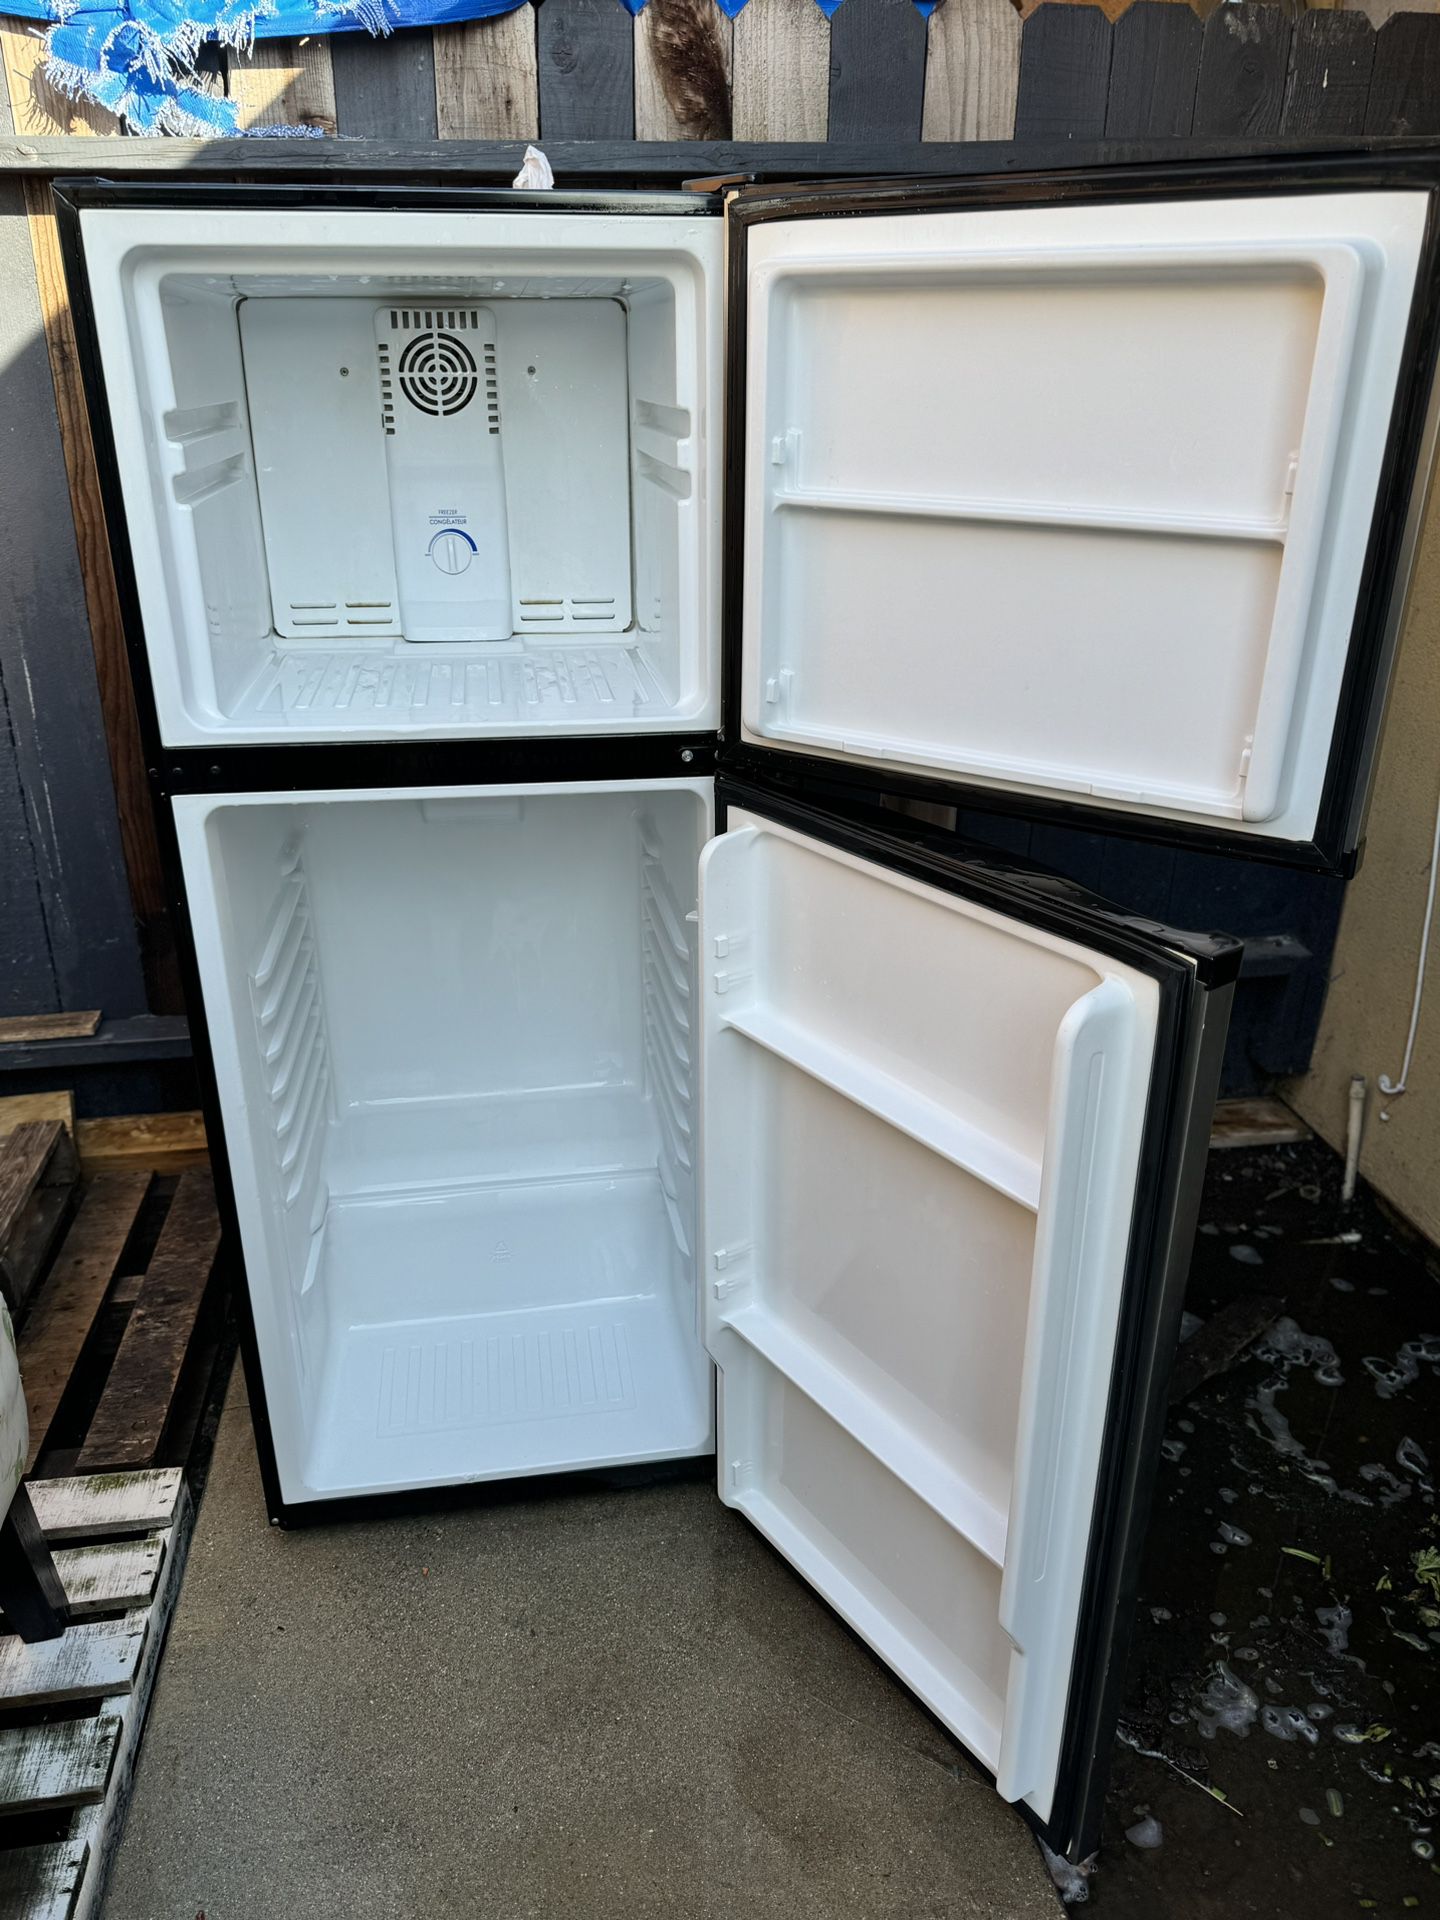 Danby Designer 10 cu. ft. Apartment Size Refrigerator  